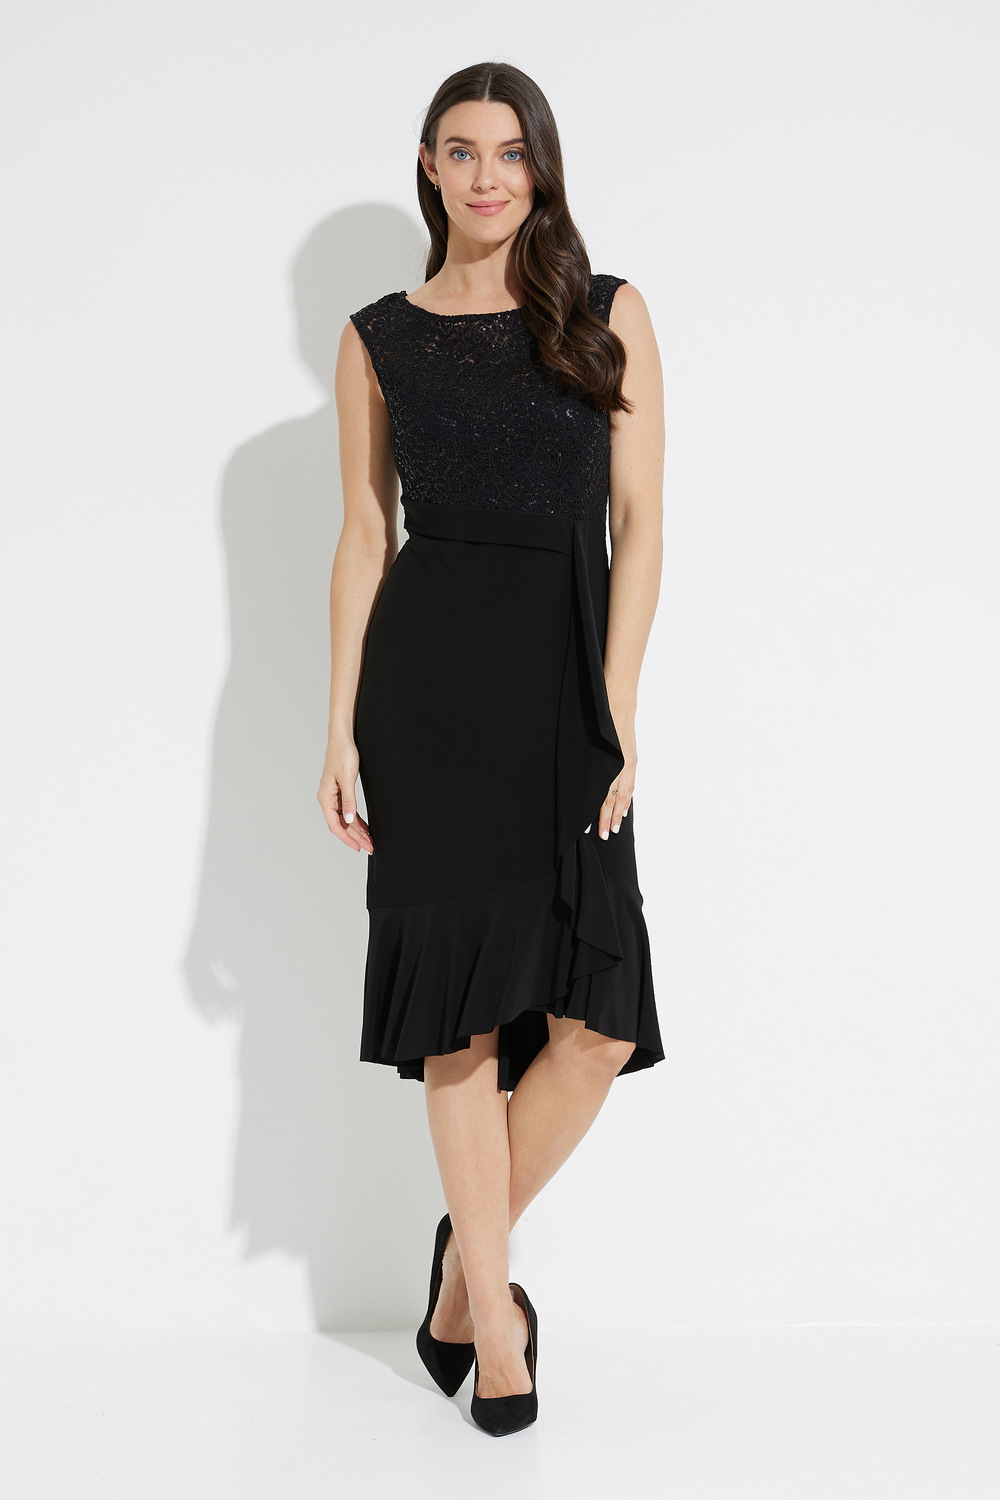 Joseph Ribkoff Lace Bodice Dress Style 223726. Black